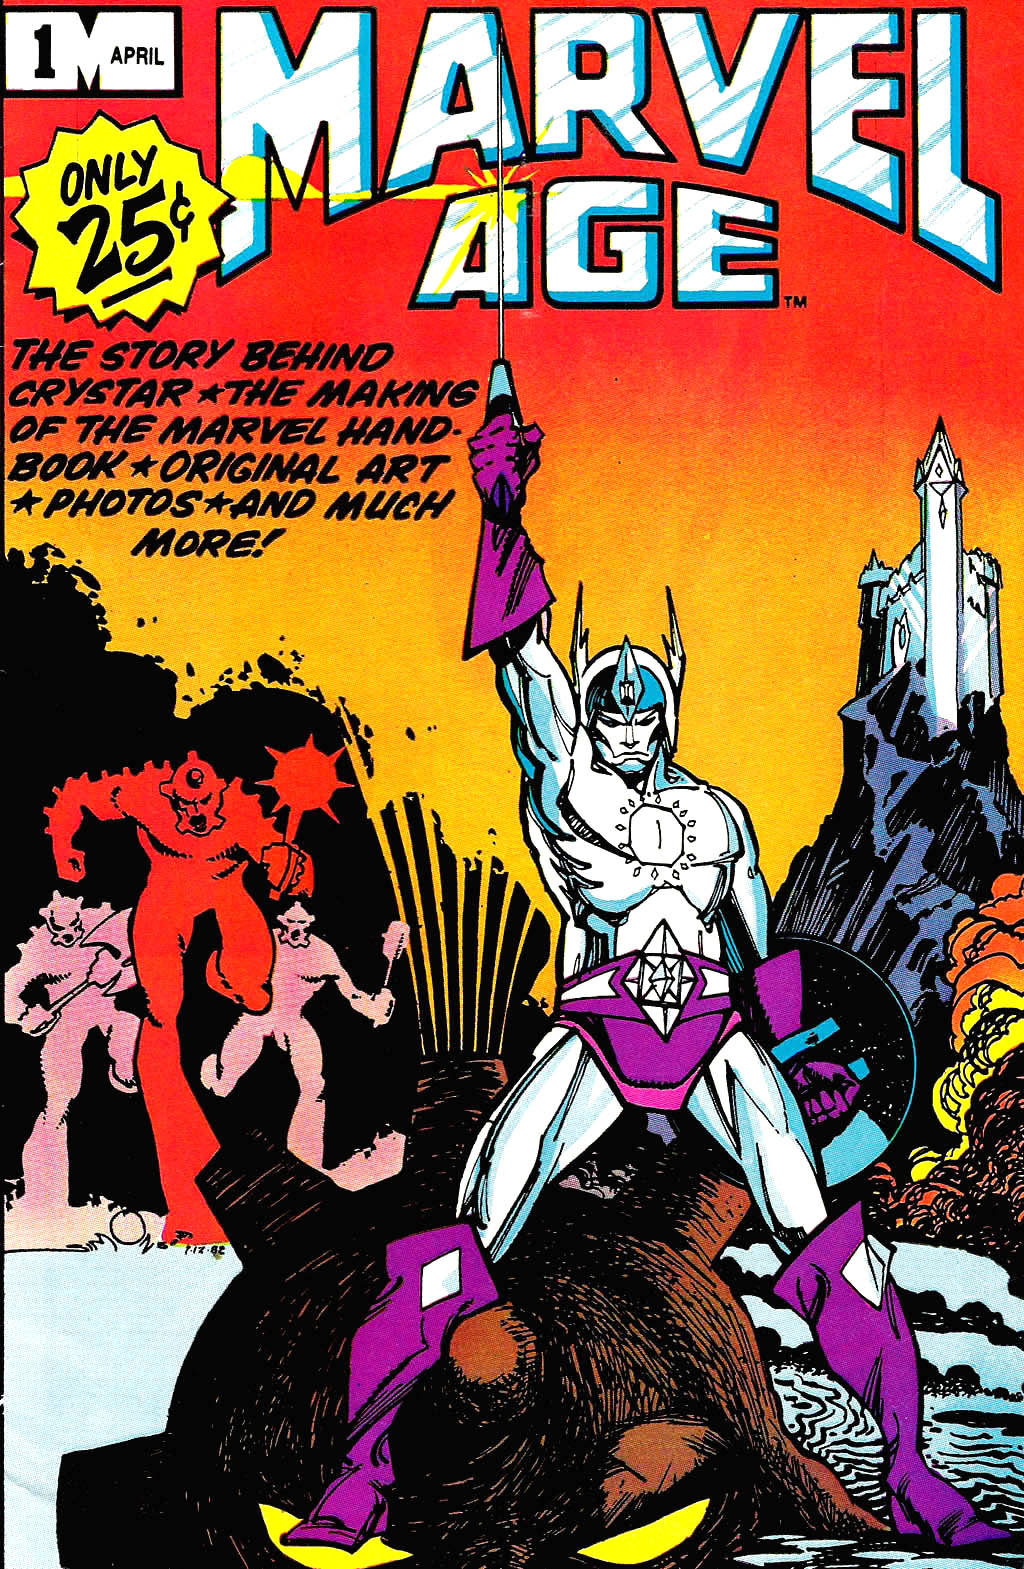 Marvel Age Vol. 1 #1